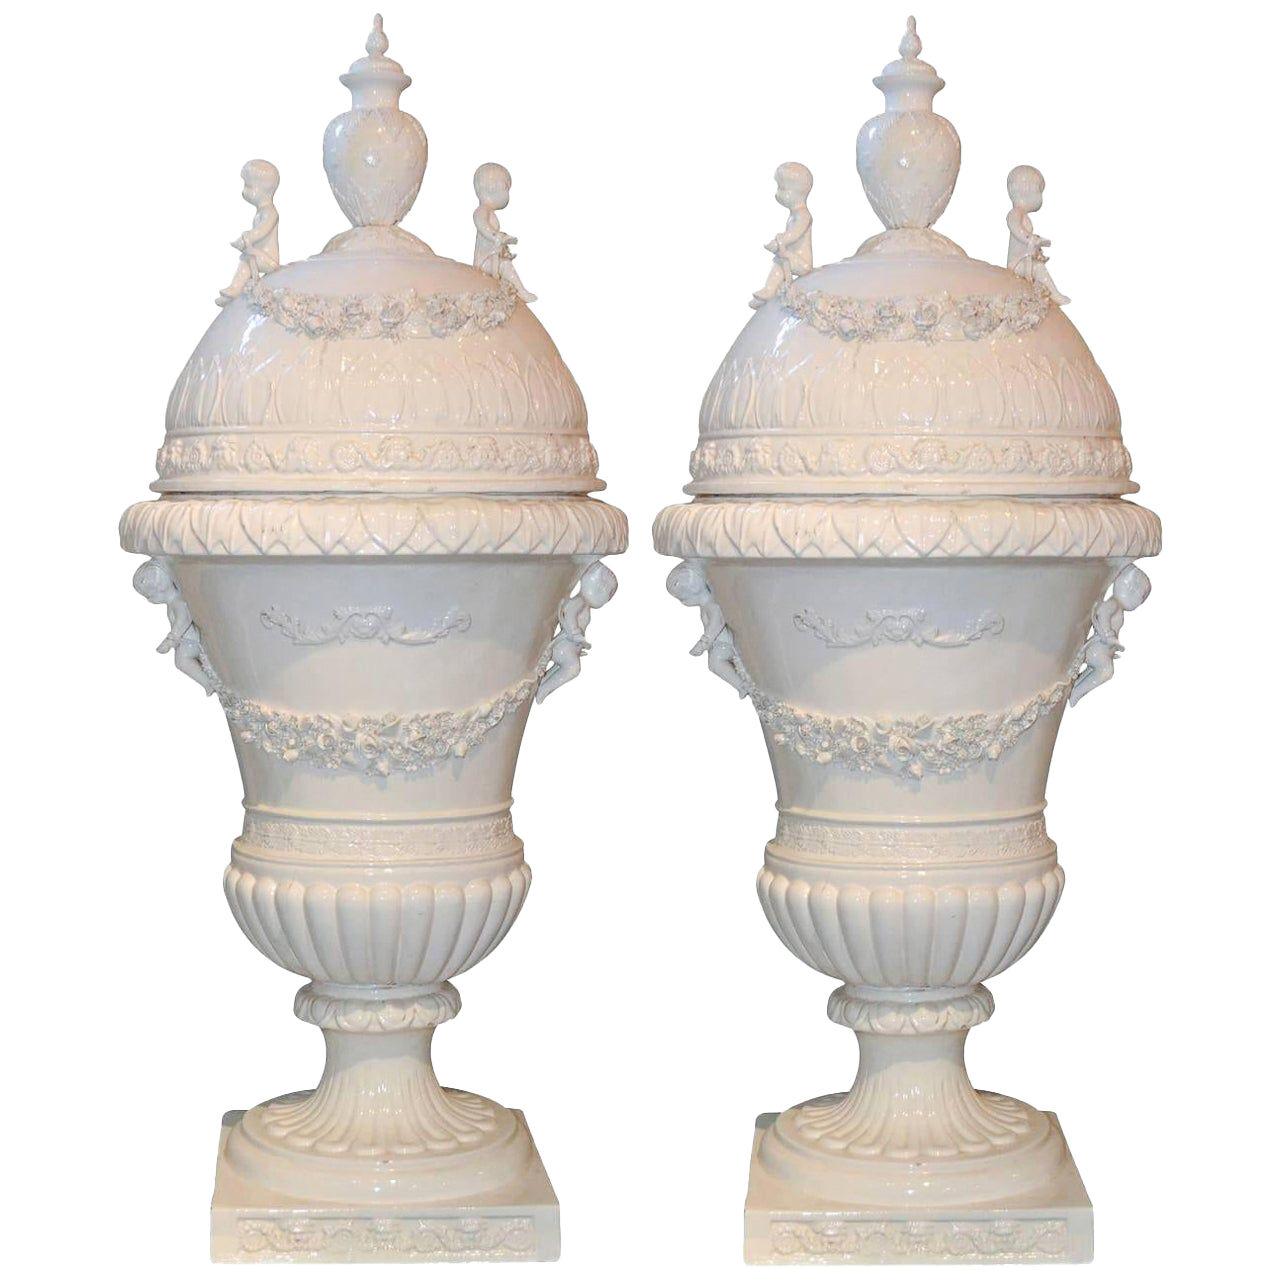 Antique Italian Glazed Porcelain Capped Urns